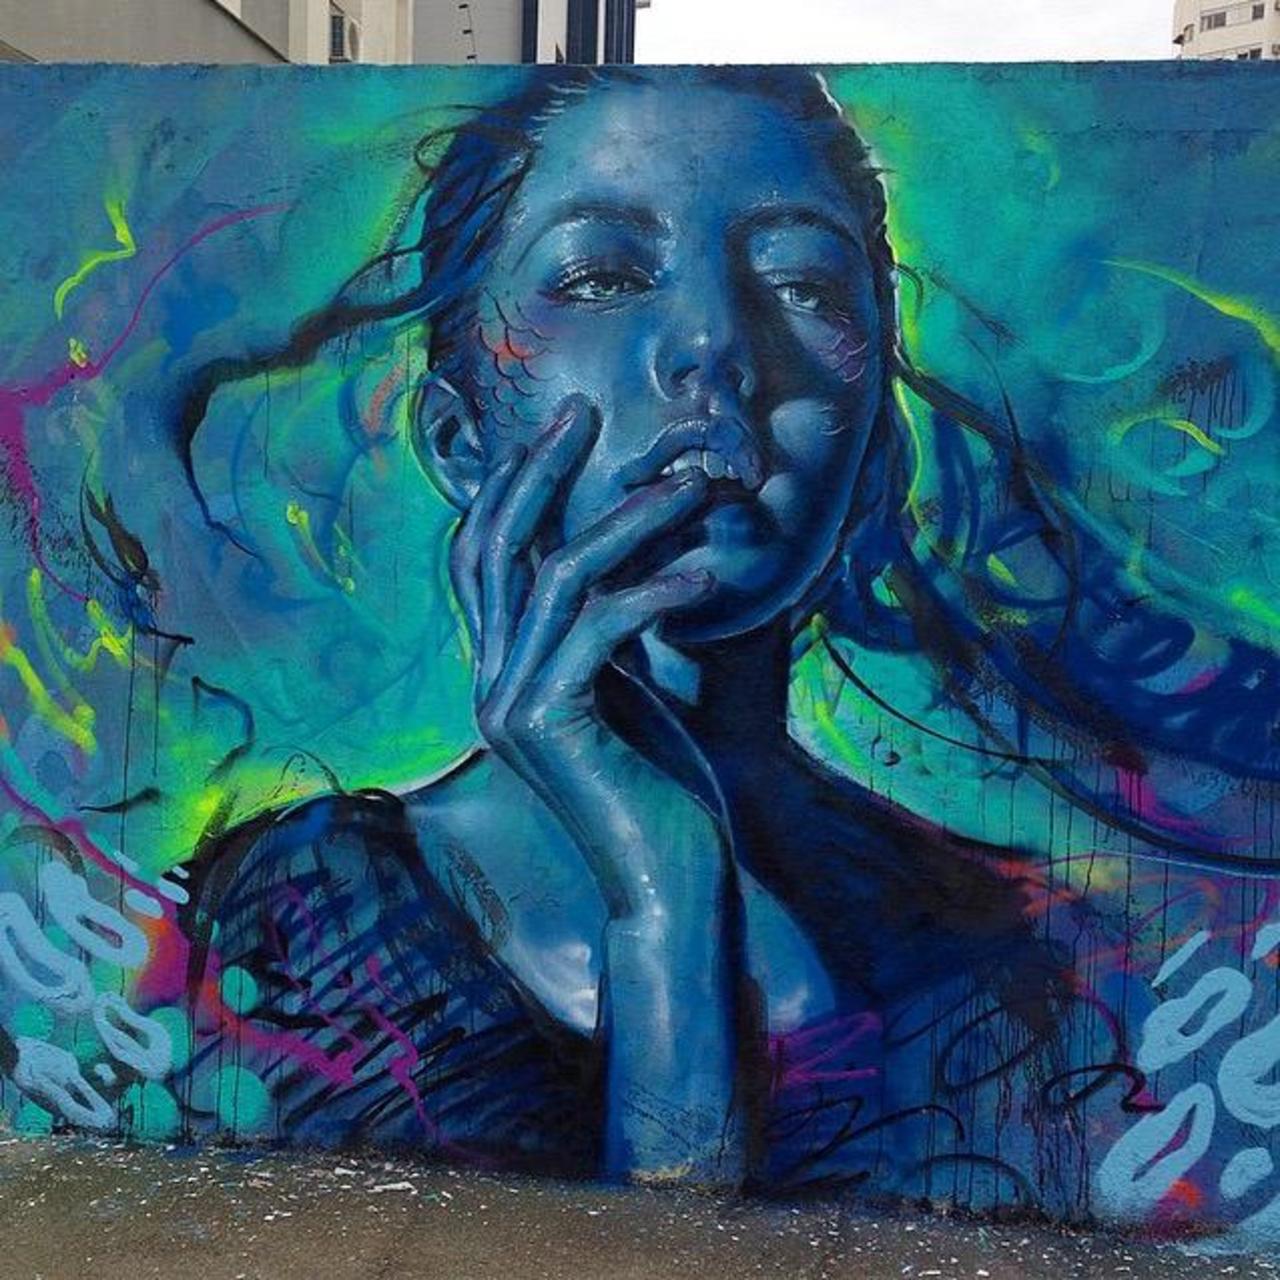 Thiago Valdi new Street Art piece titled 'Day Dreamer'

#art #mural #graffiti #streetart http://t.co/vfmntRodiu